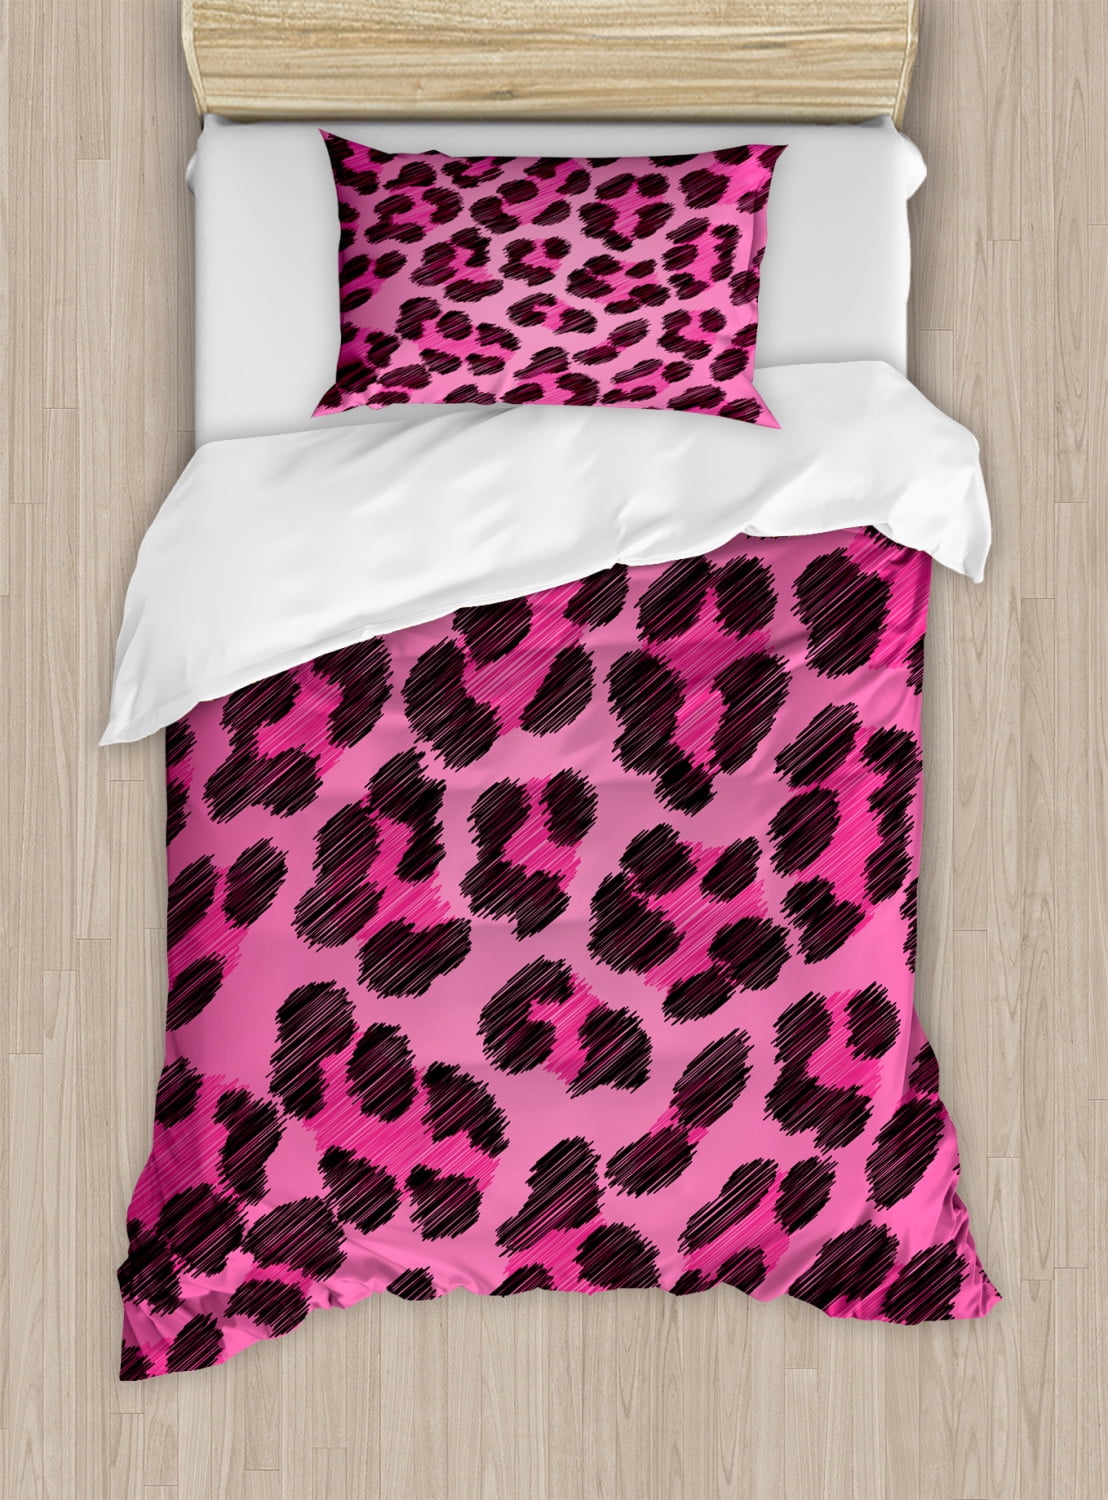 Teen Room Duvet Cover Set Vibrant Leopard Skin Pattern Fashion